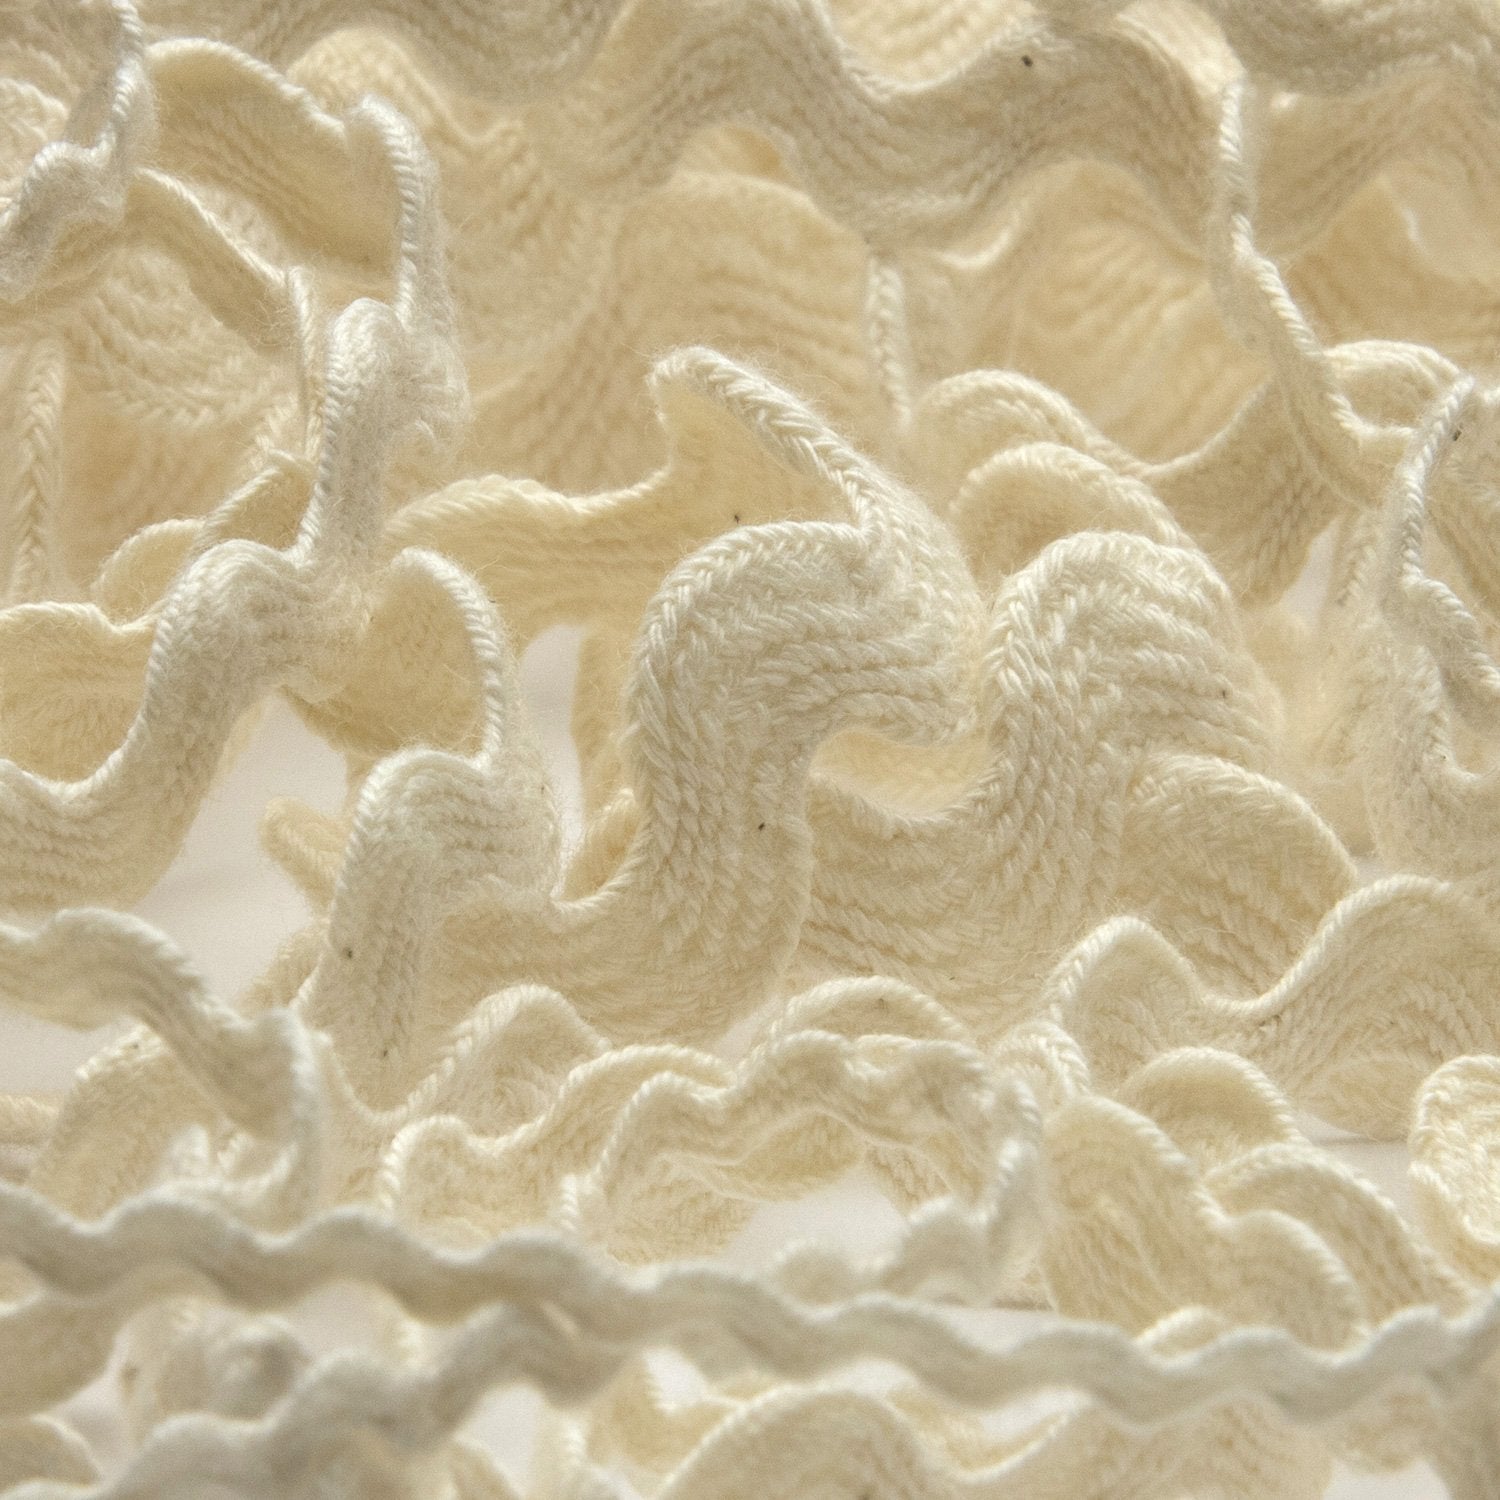 FUJIYAMA RIBBON [Wholesale] Organic Cotton Zig-Zag Tape approx.7mm Ecru 30 Meters Roll